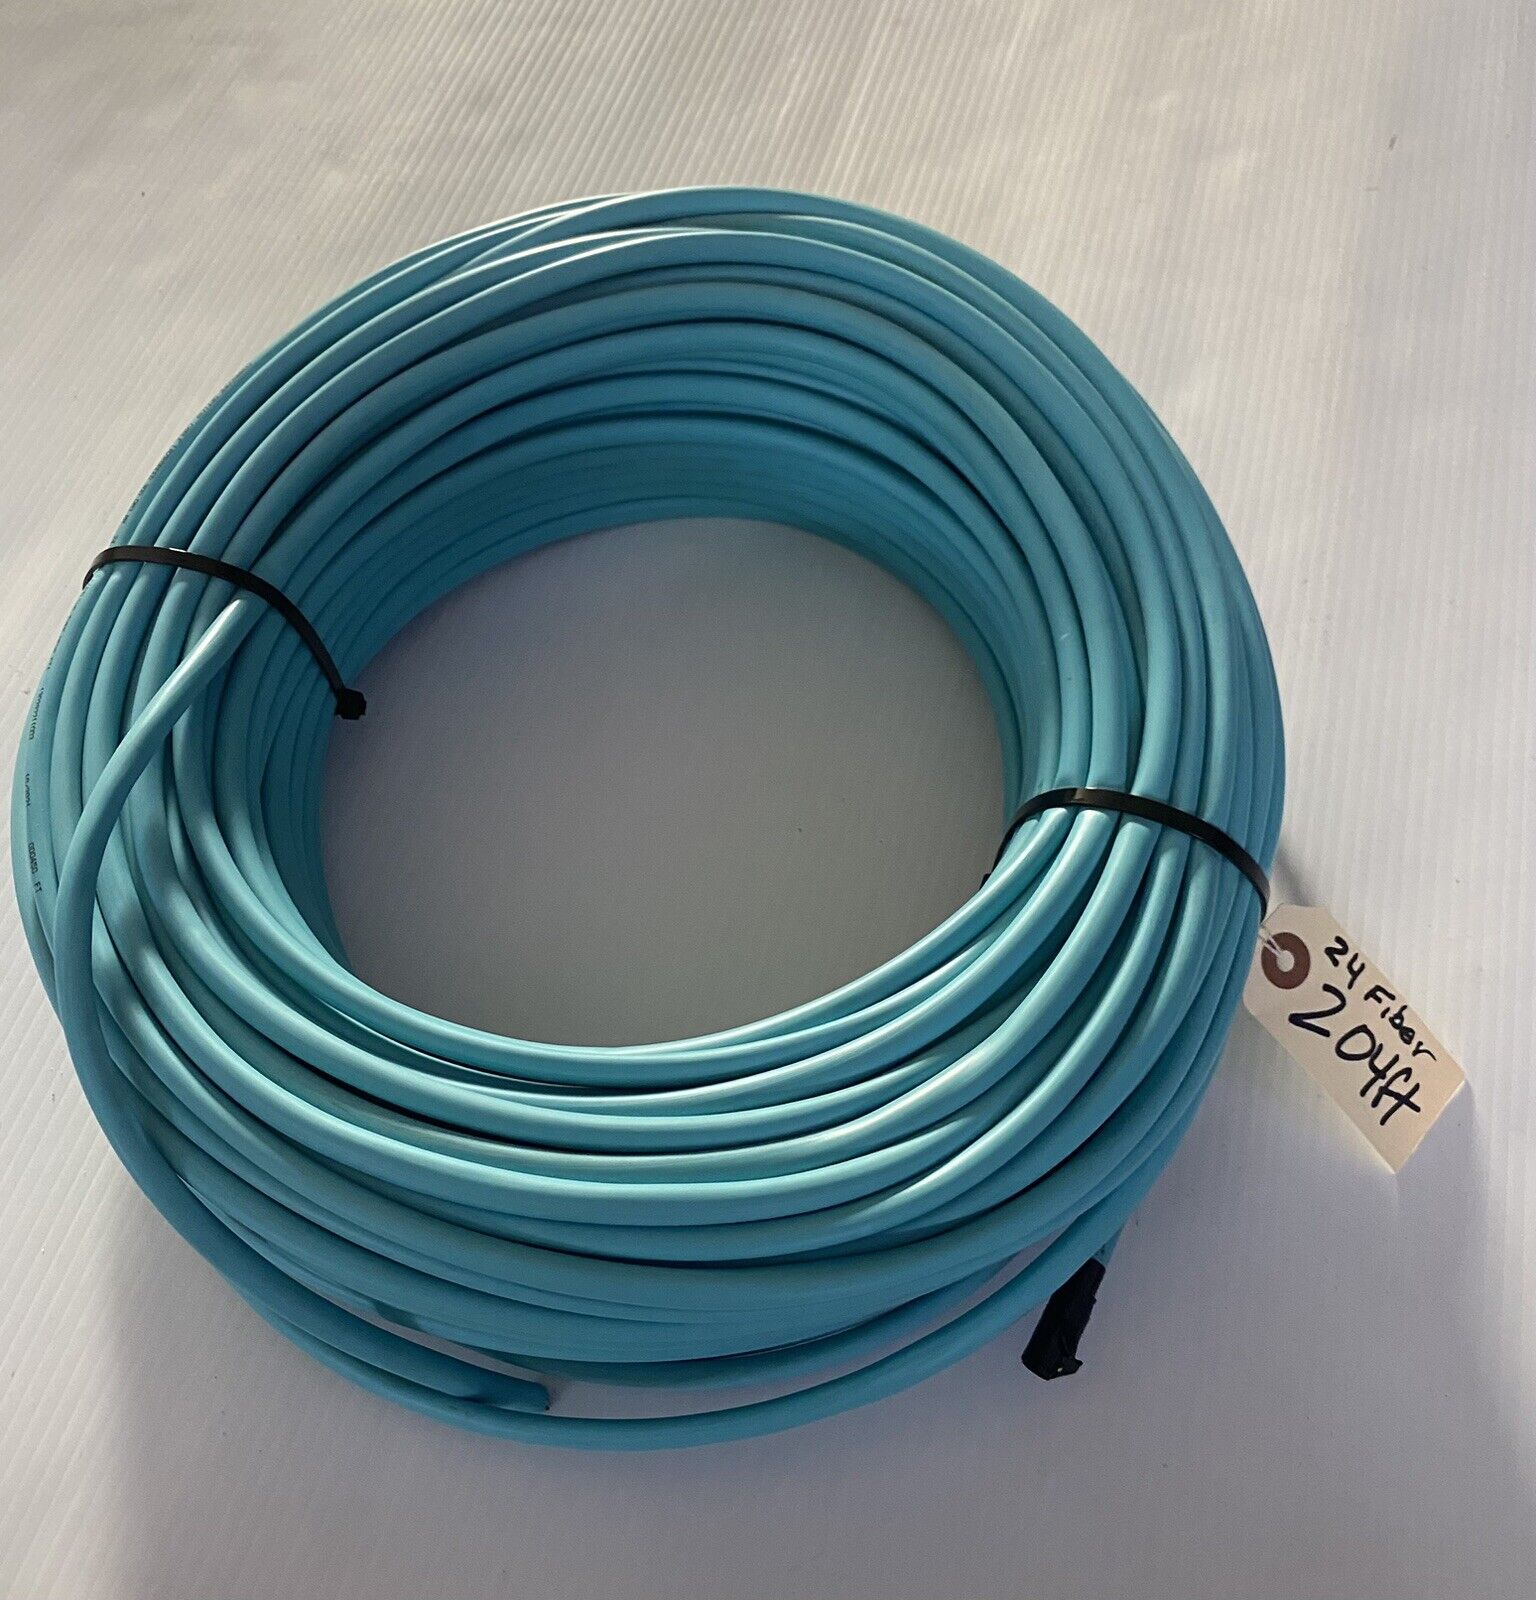 CommScope optical cable lazrSPEED 300 OM3 MM 24 Fiber C(ETL)US Type OFNR FT4